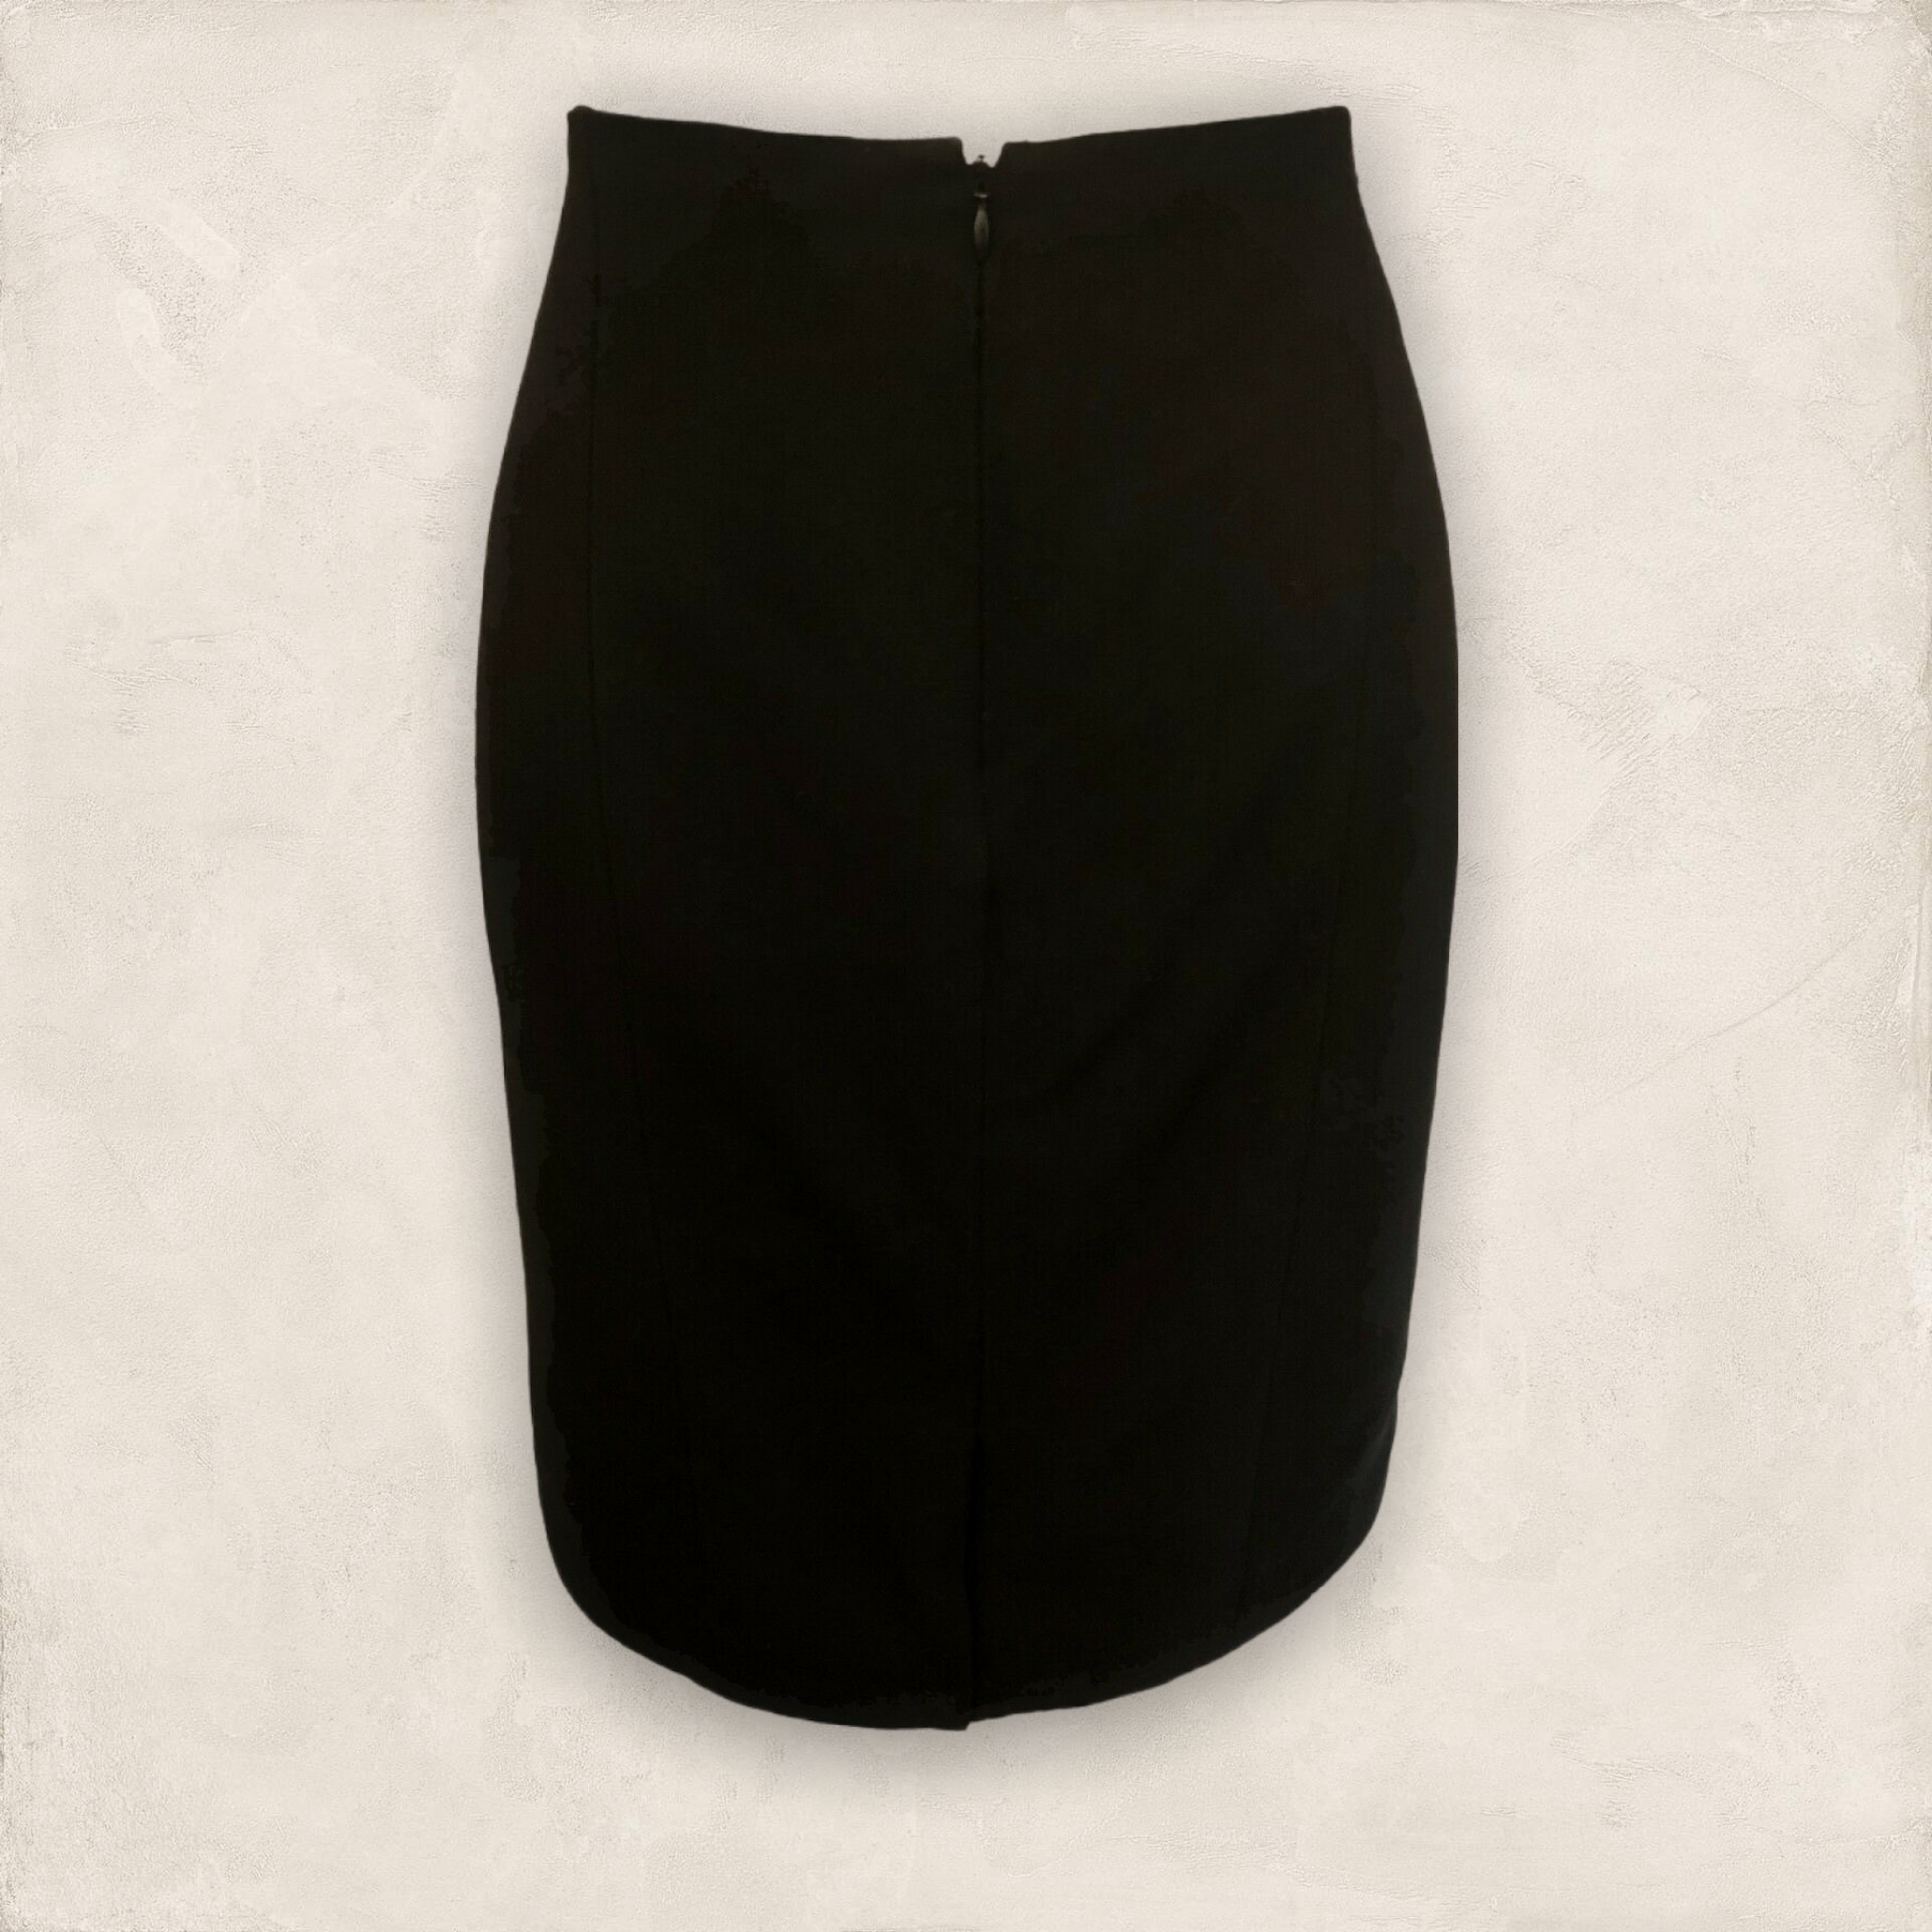 Alexander Wang Black Long Tail Wool Mix Mini Skirt UK 10/12 US 6/8 EU 38/40 BNWT RRP £490.00 Timeless Fashions